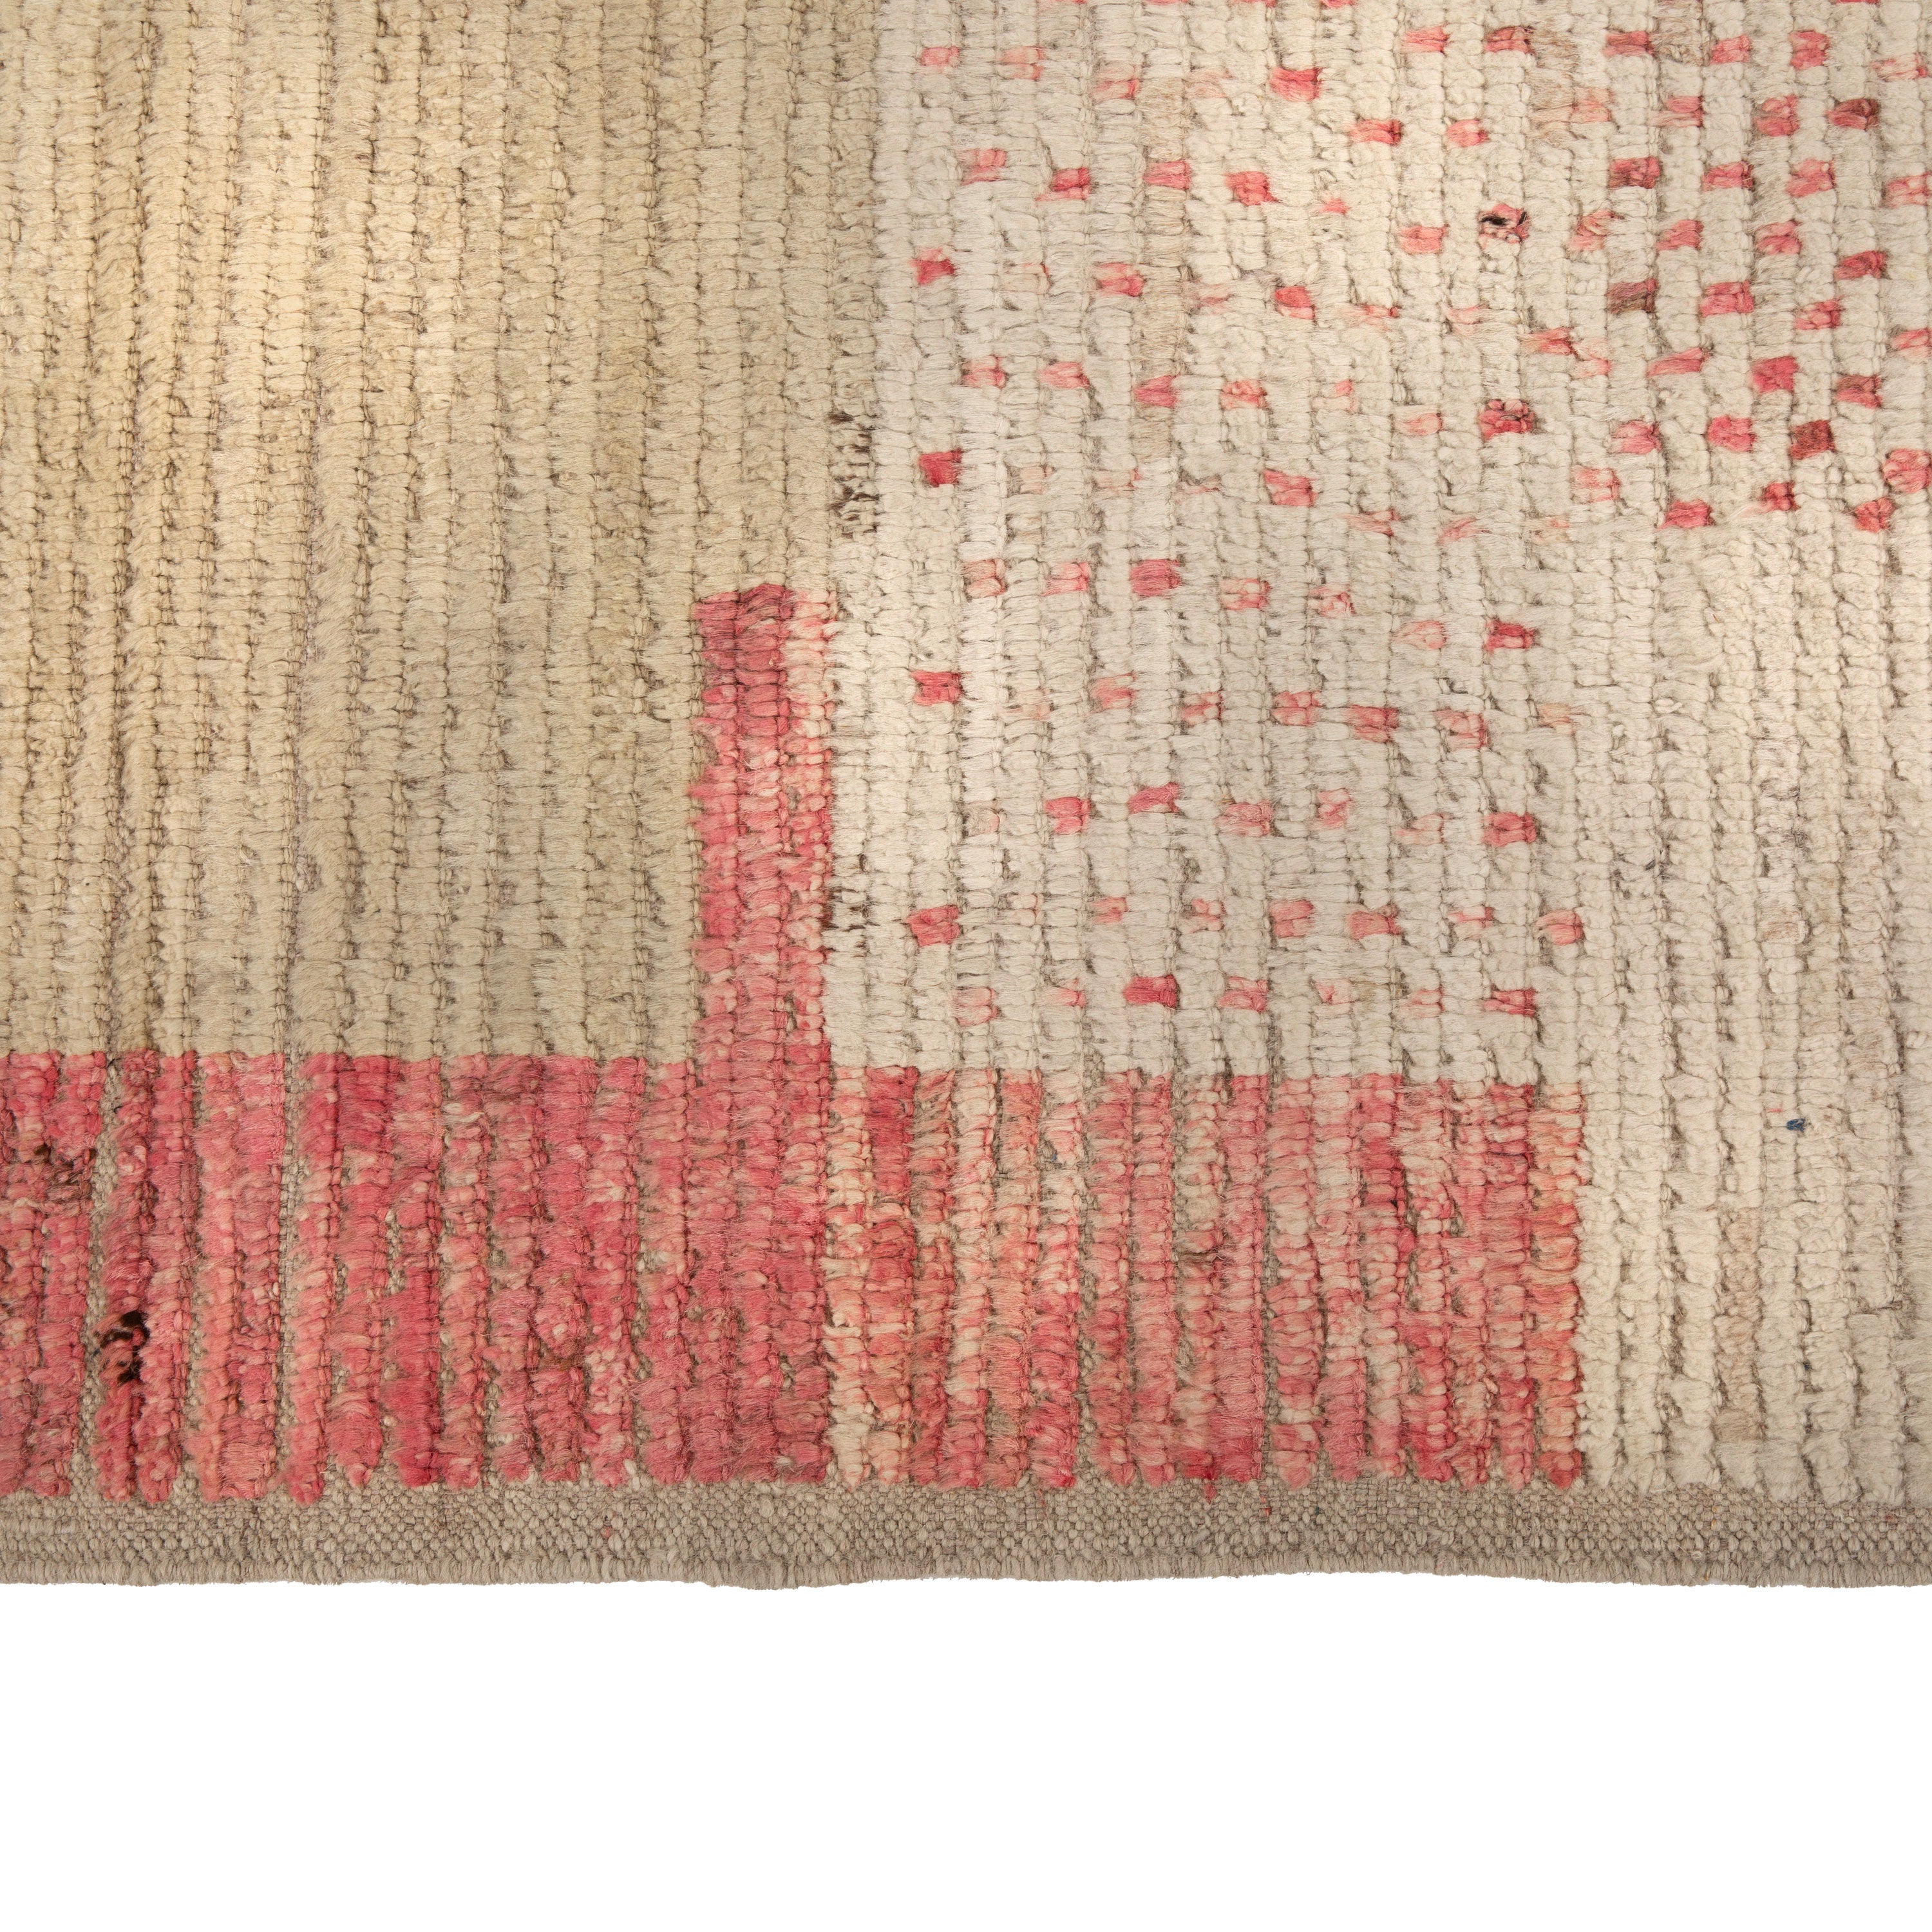 Zameen Patterned Modern Wool Rug - 7' x 9'5" Default Title